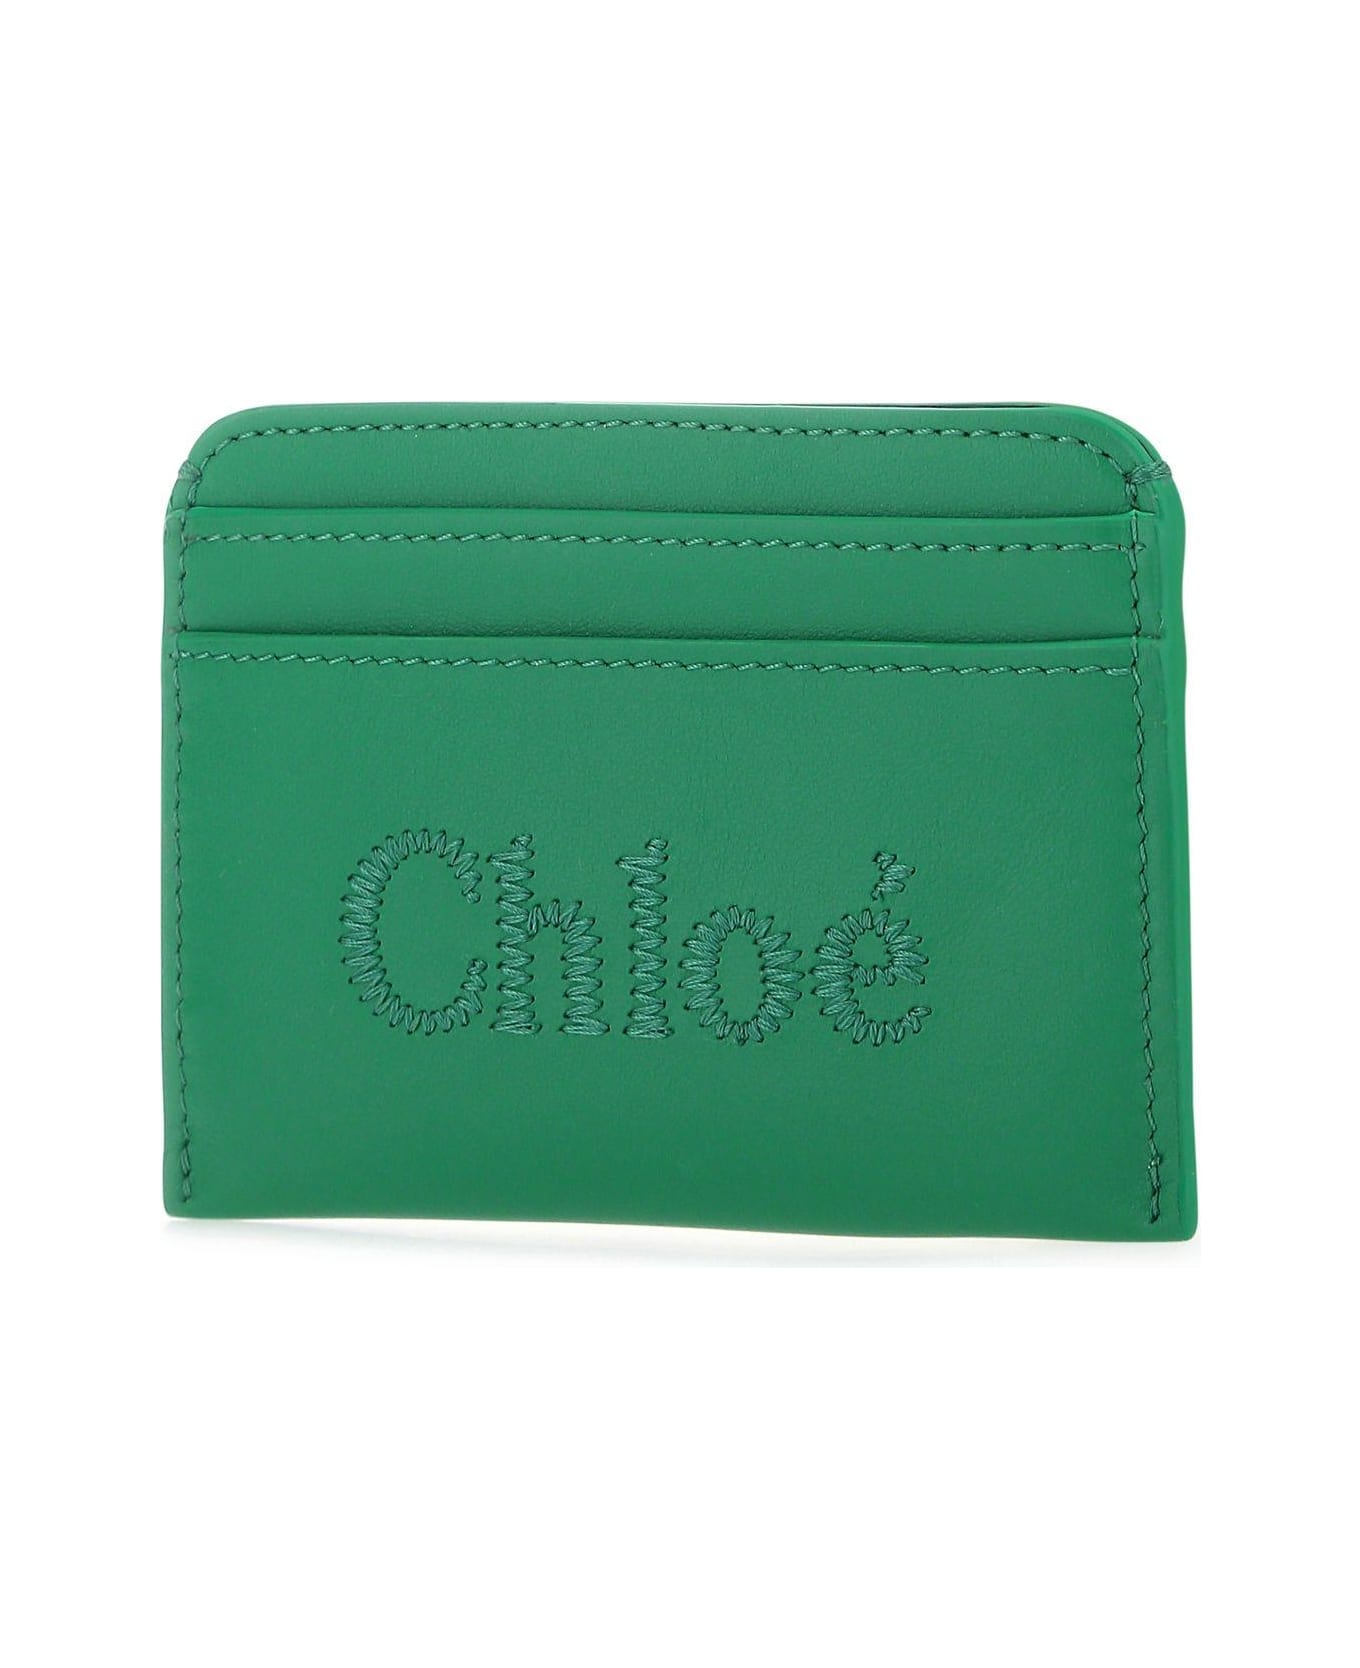 Chloé Green Leather Card Holder - Verde